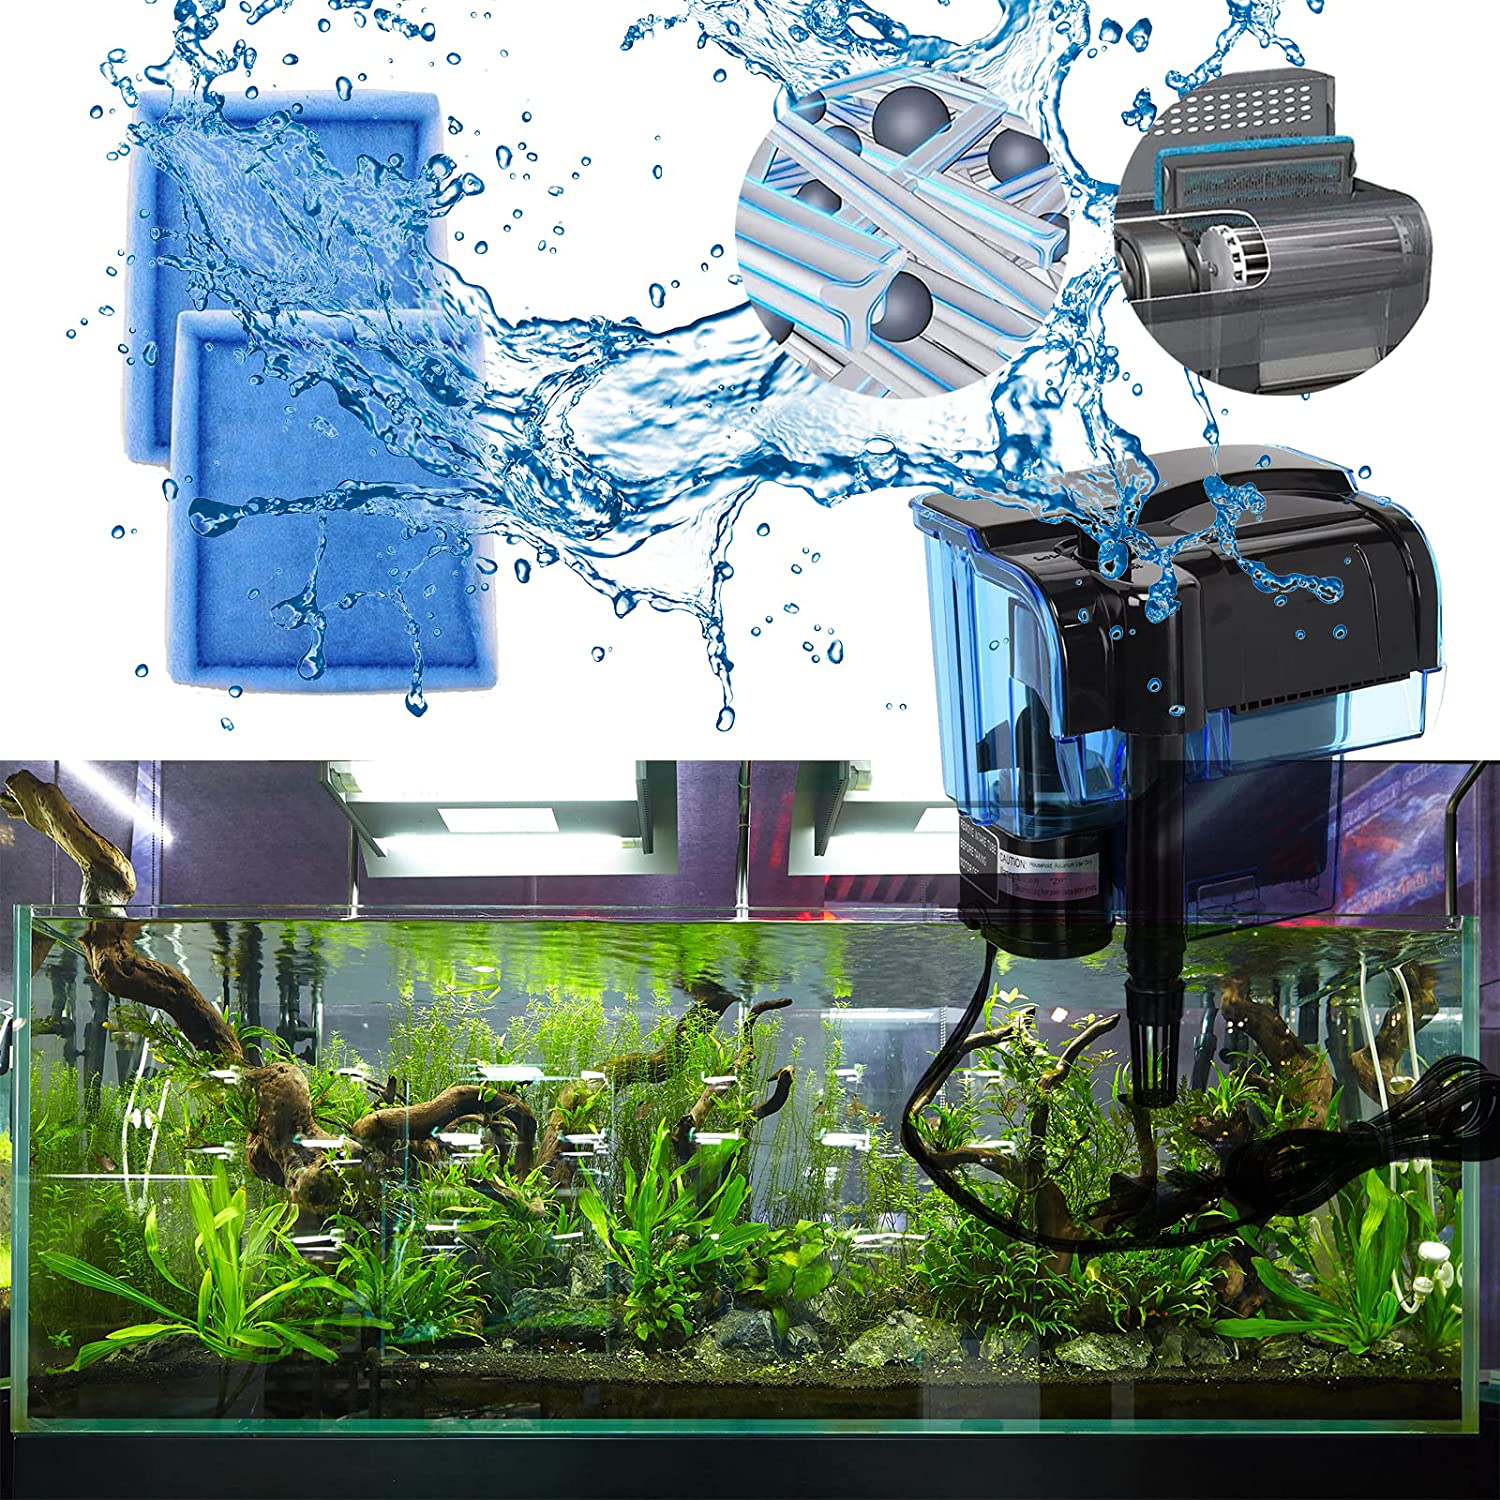 HNKMDK Aquarium Filter Cartridge, Fish Tank Filter Cartridge,Compatible with Ez-Change 3 Aquarium Filter,Fits 20-40 and 30-60 Power Filters,Aquarium Filter Replacement Parts